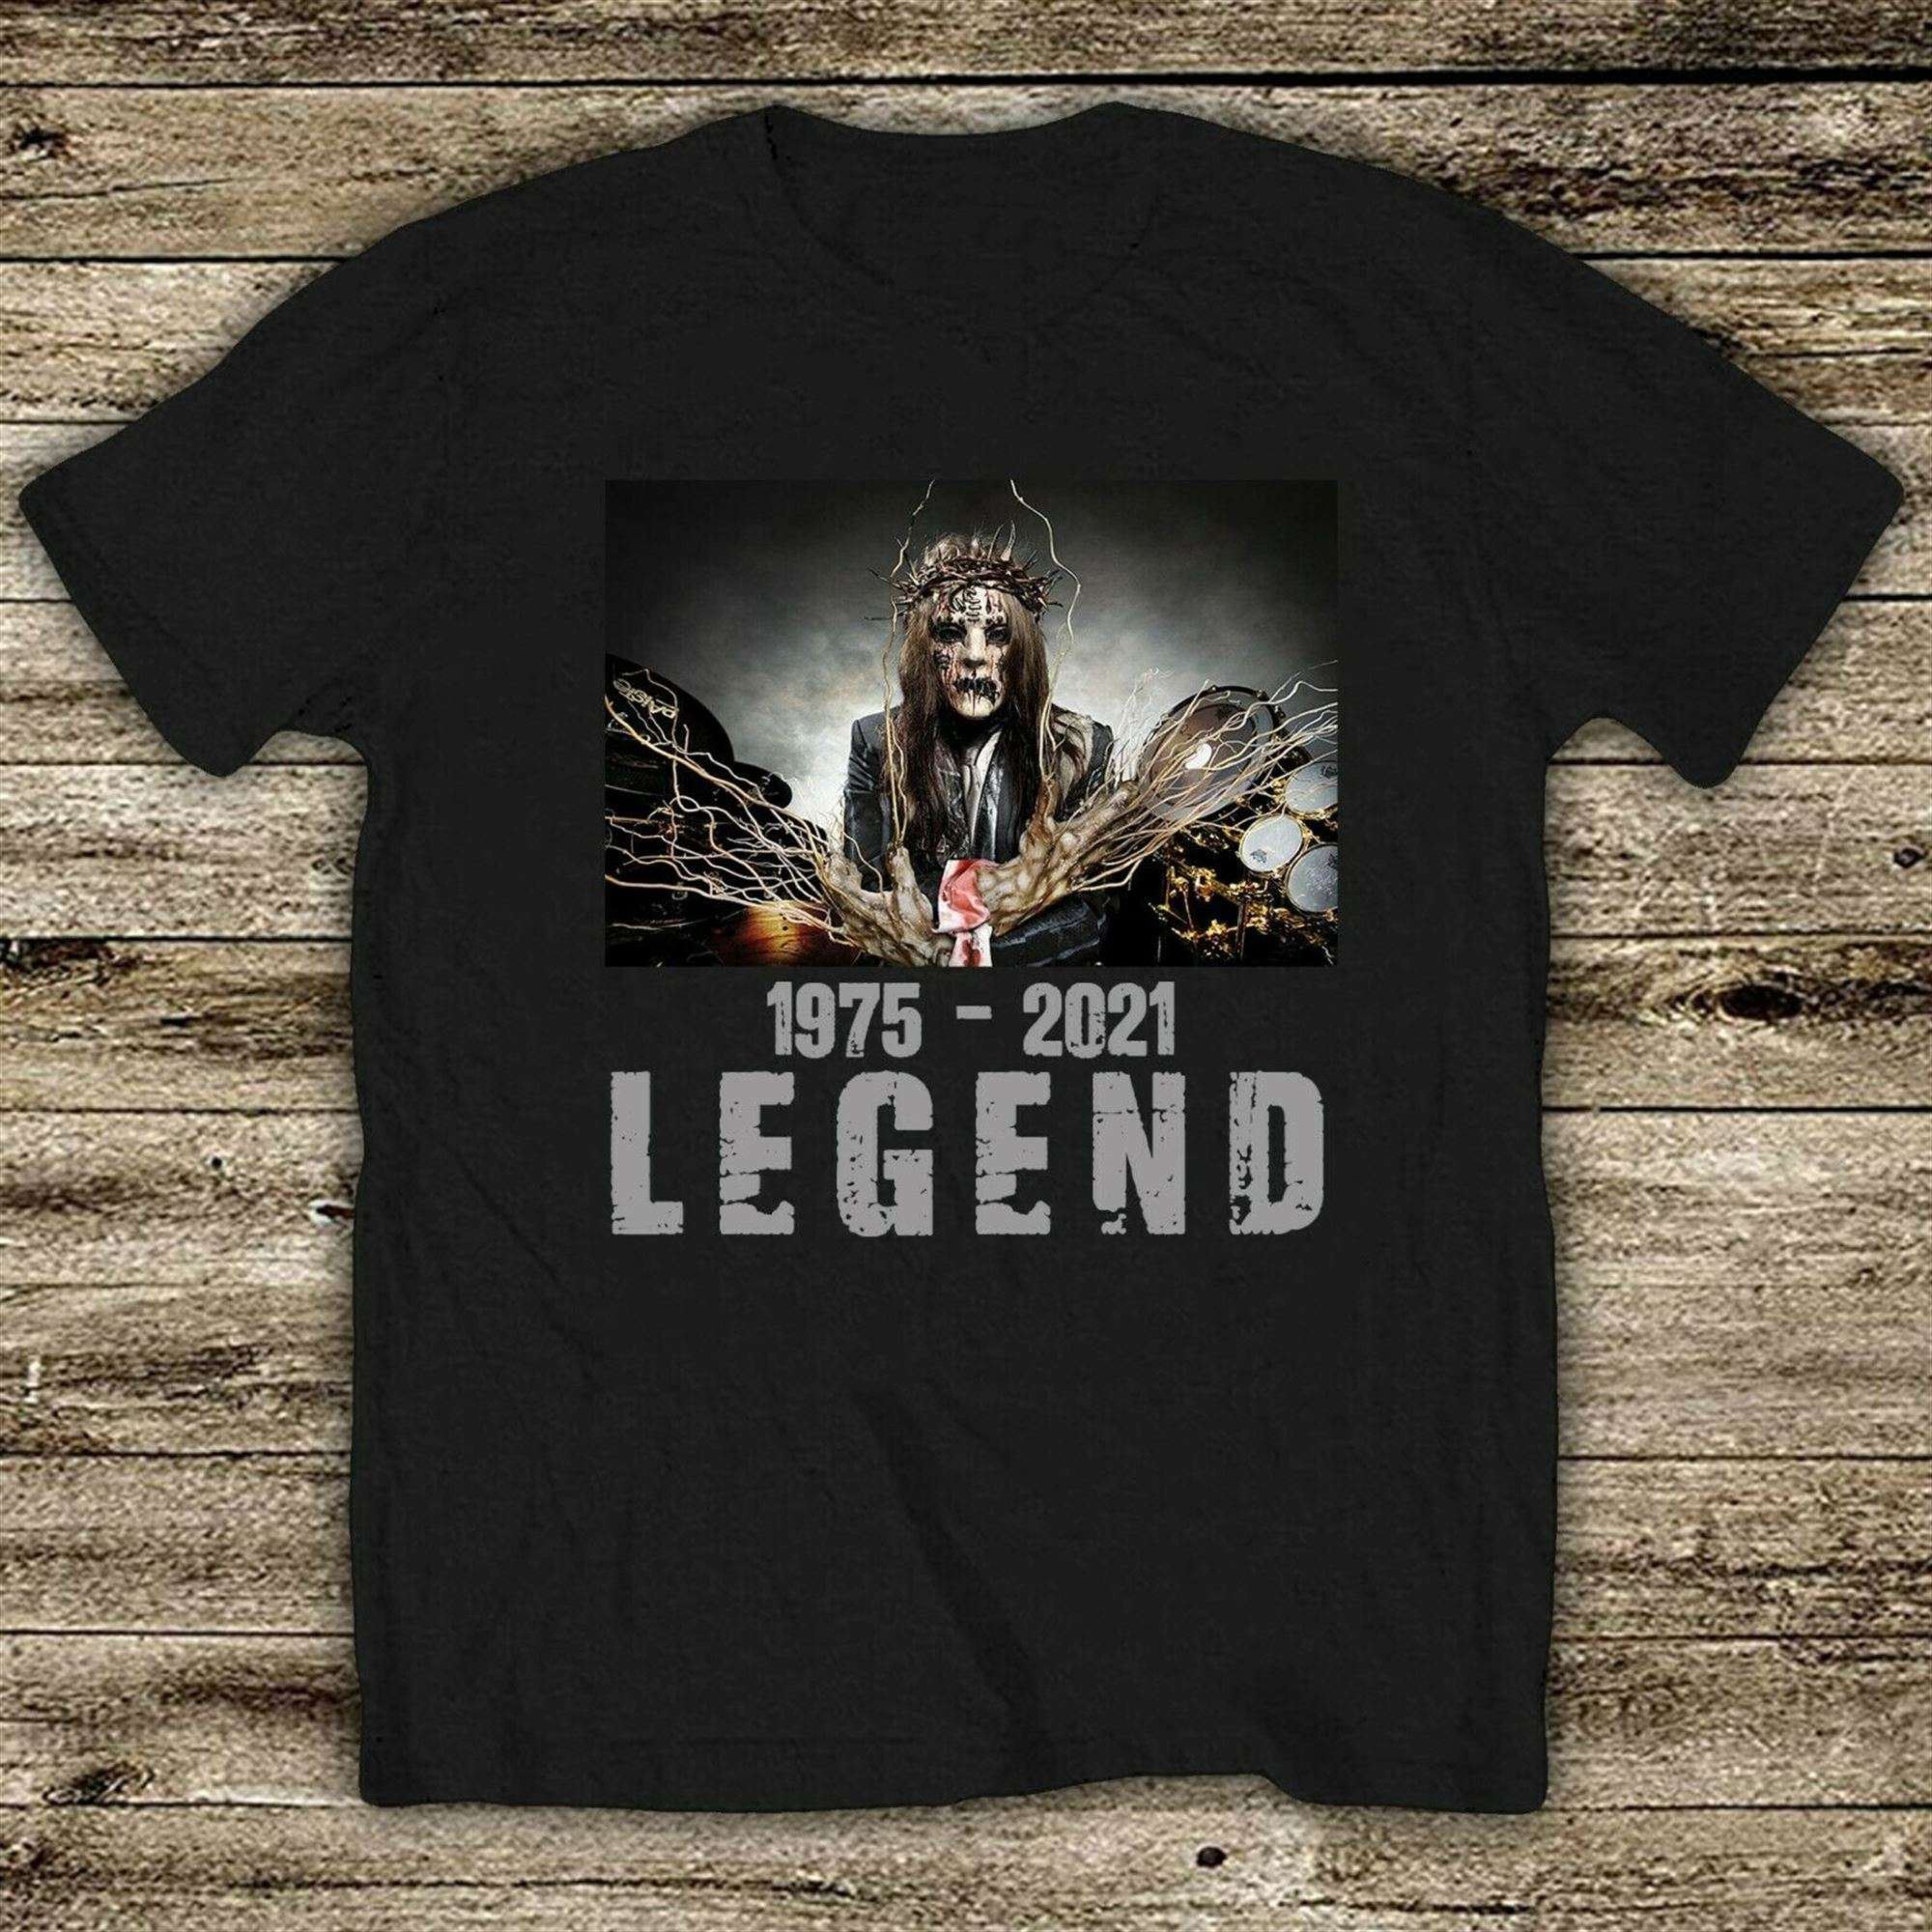 Rip Joey Jordison Slipknot Band Legend T Shirt Full Size Up To 5xl